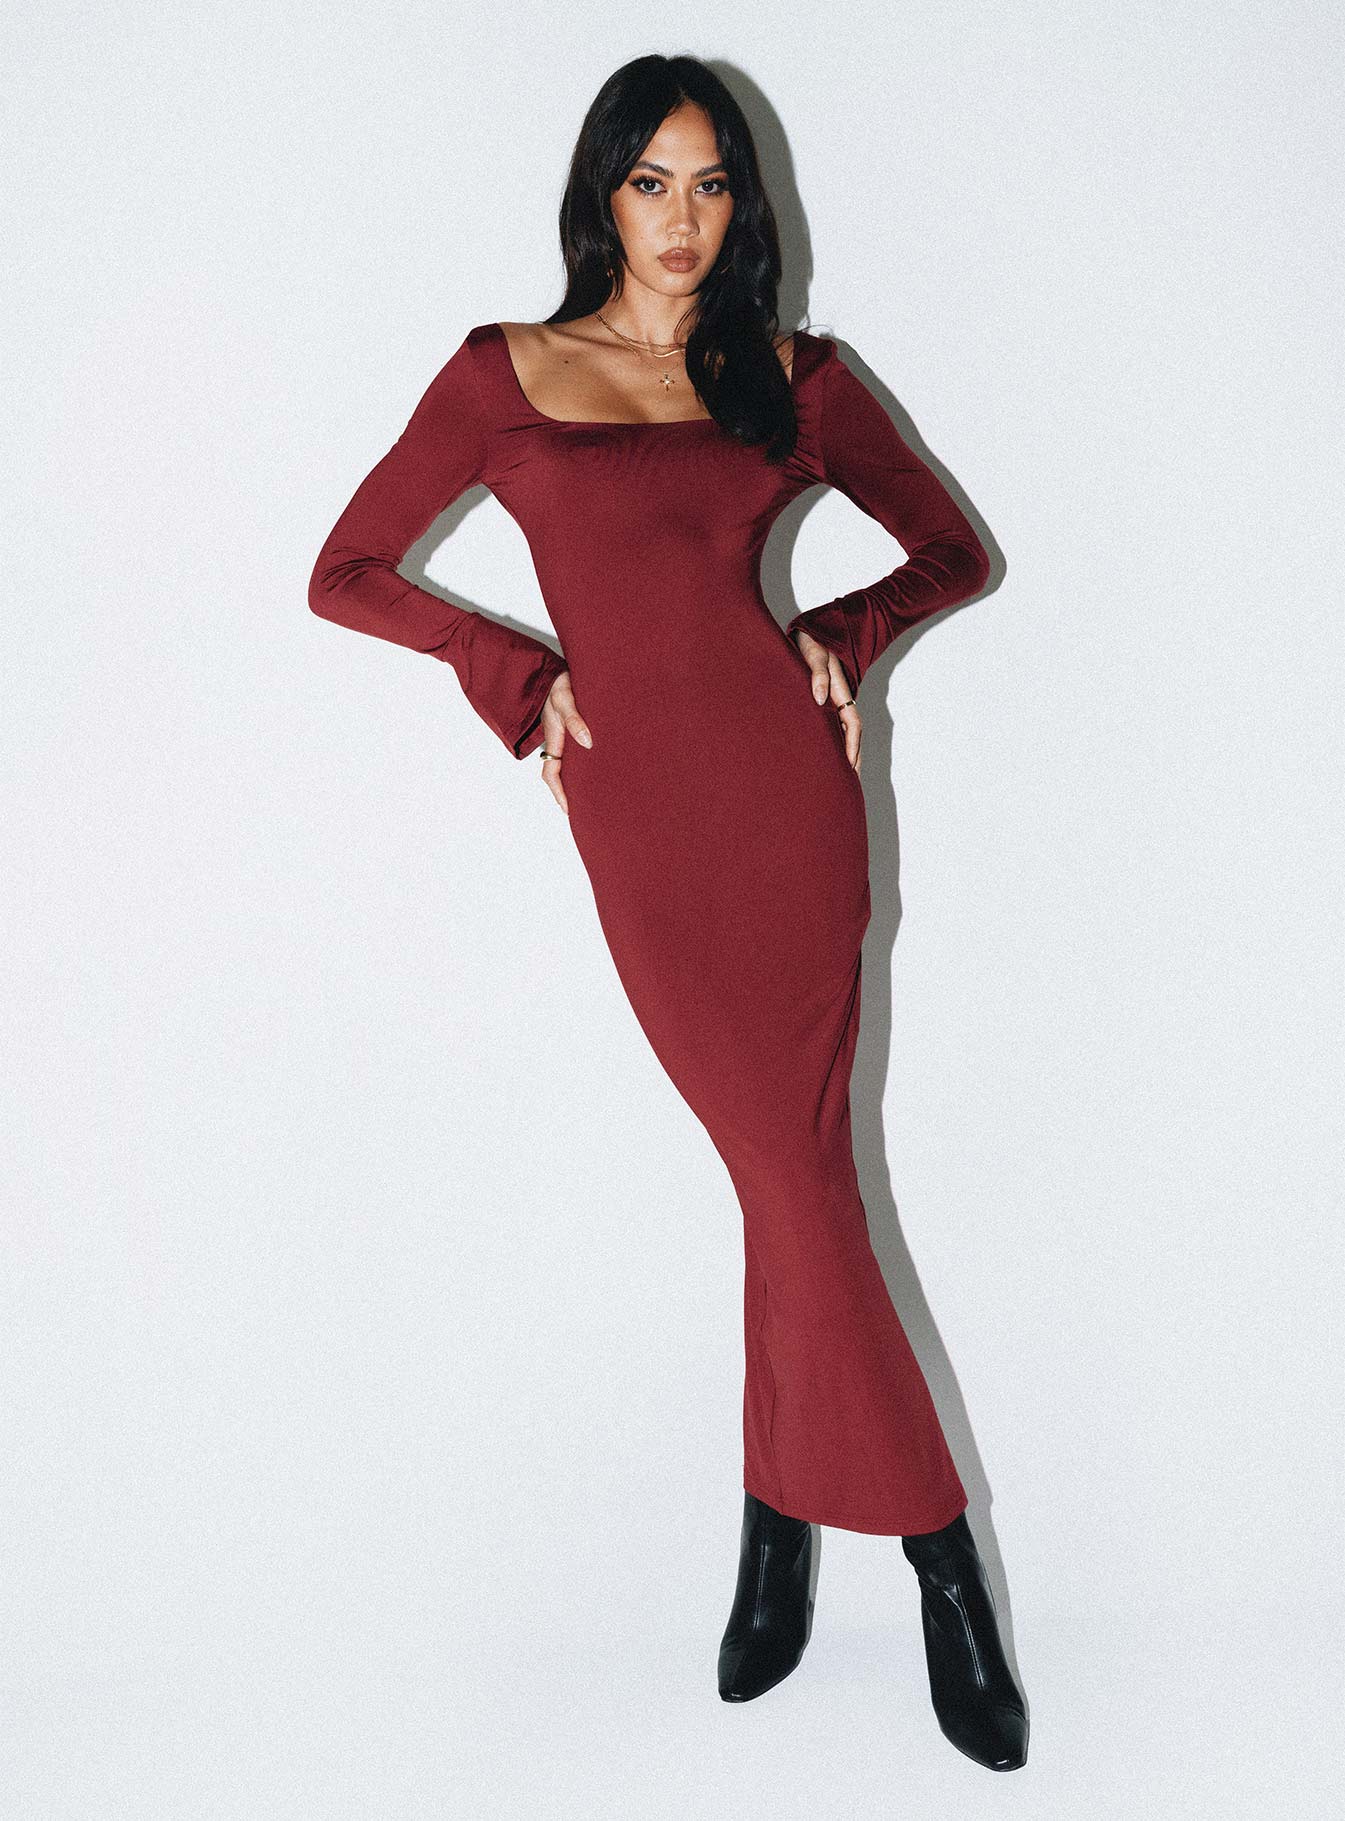 long sleeve burgundy dress